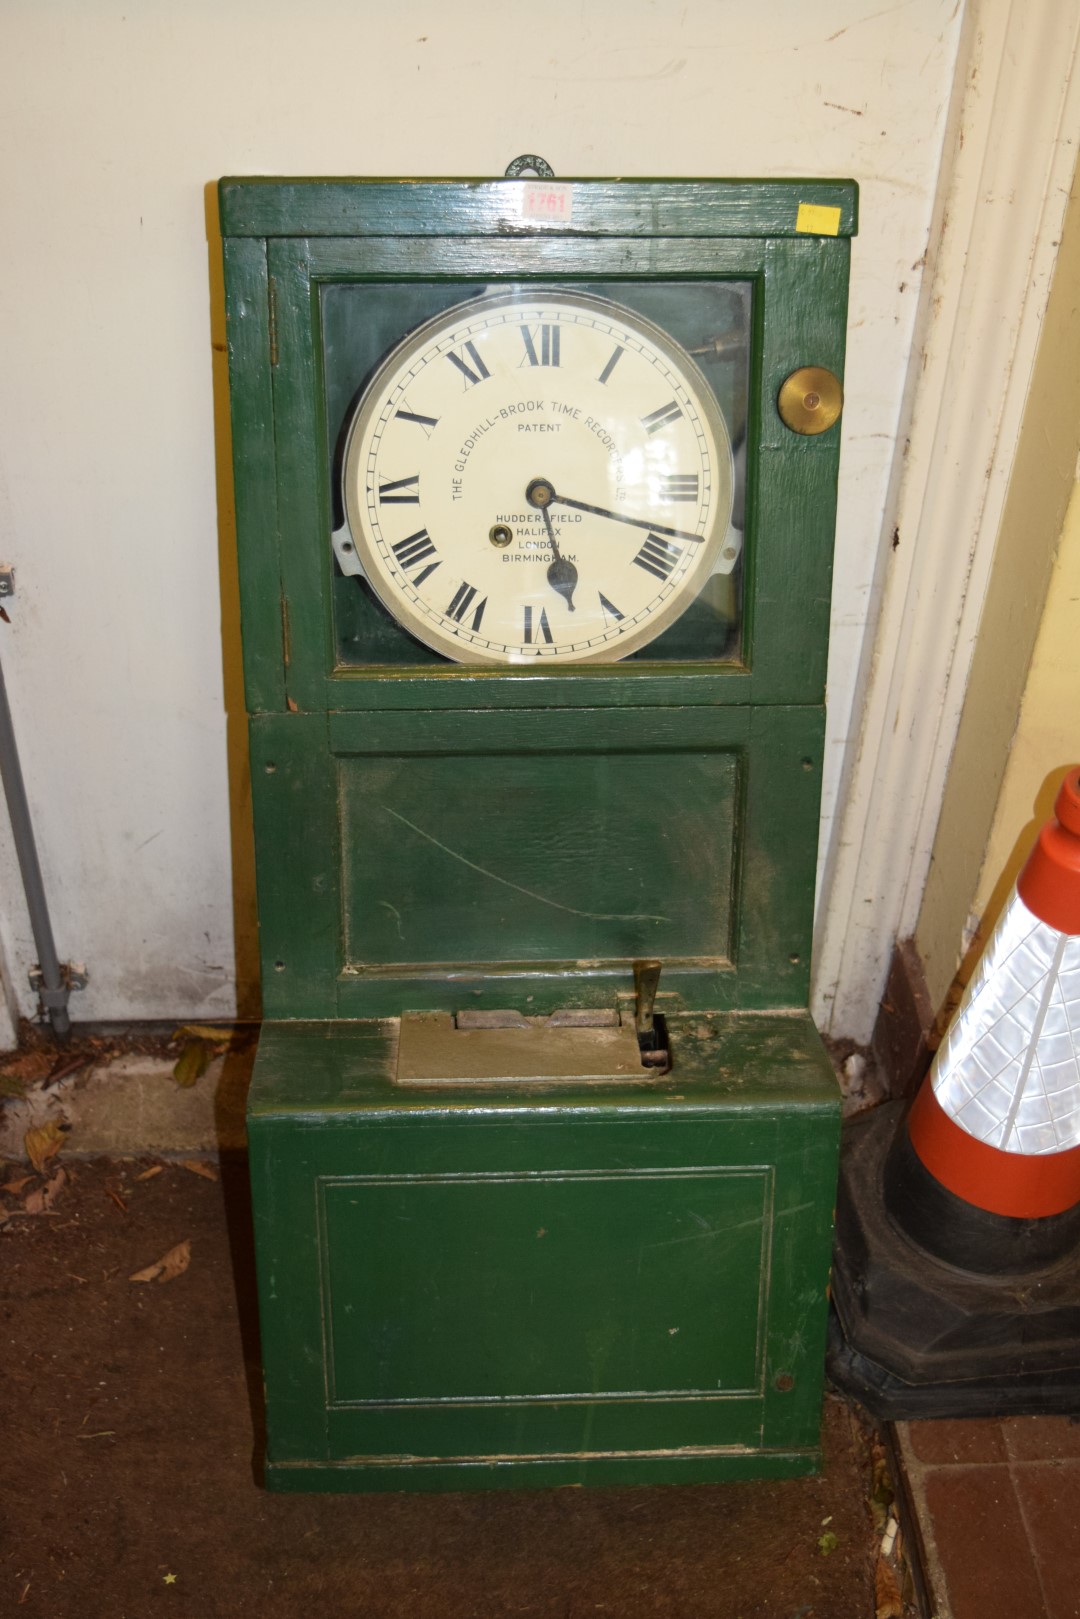 A Gledhill-Brook Time Recorder.